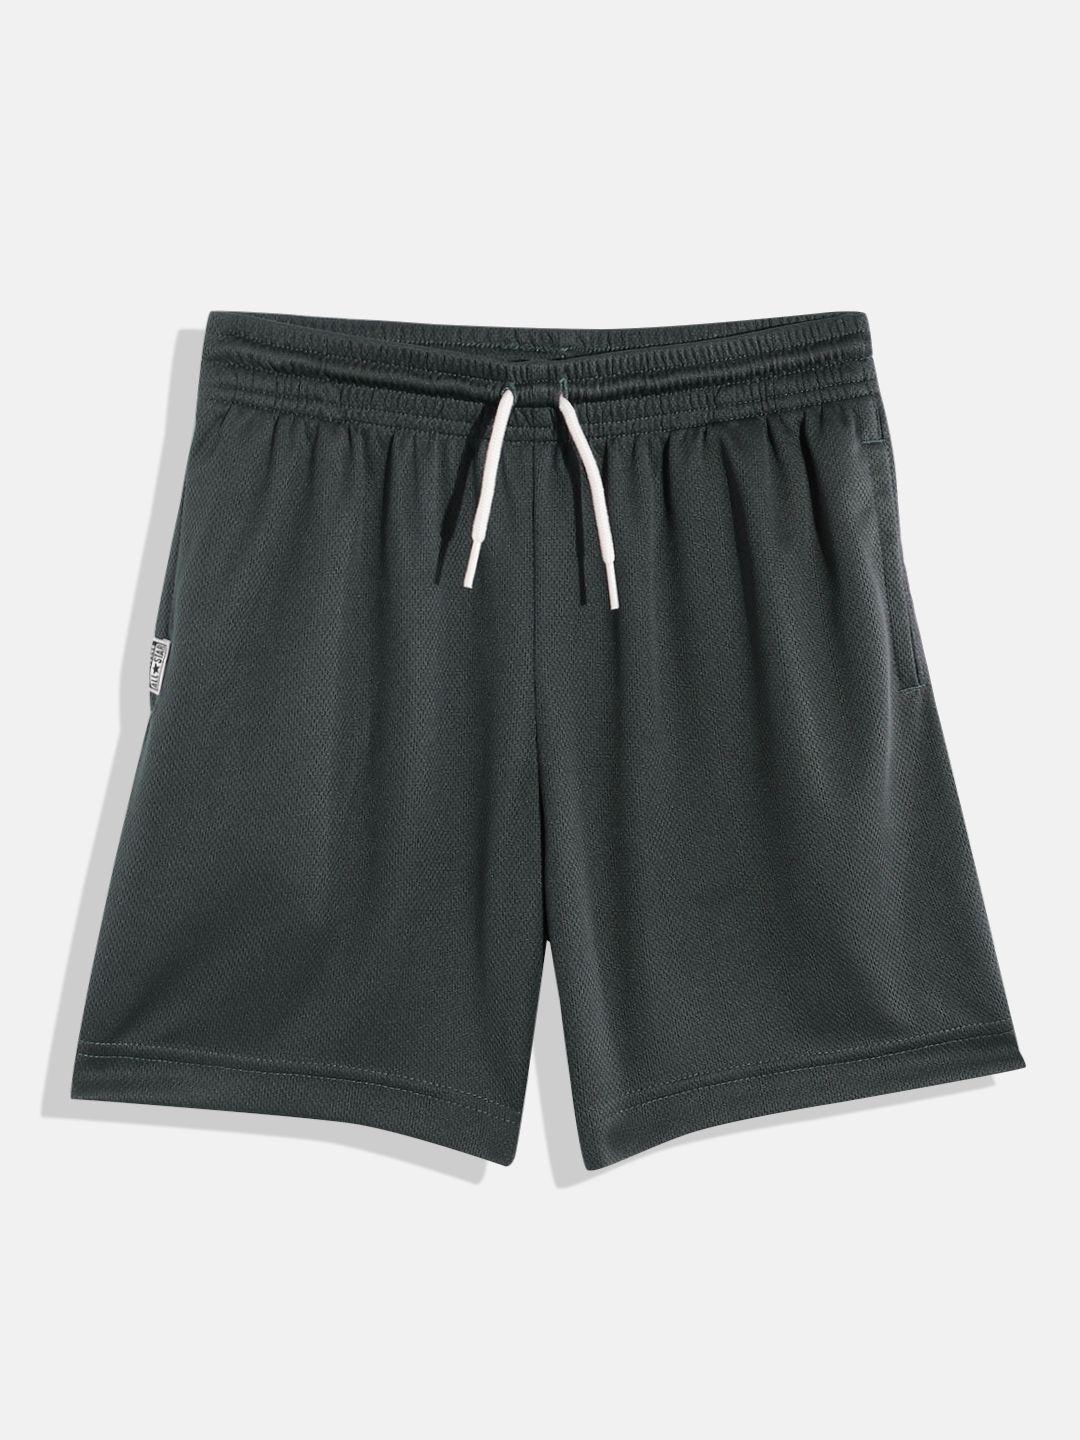 converse boys grey shorts